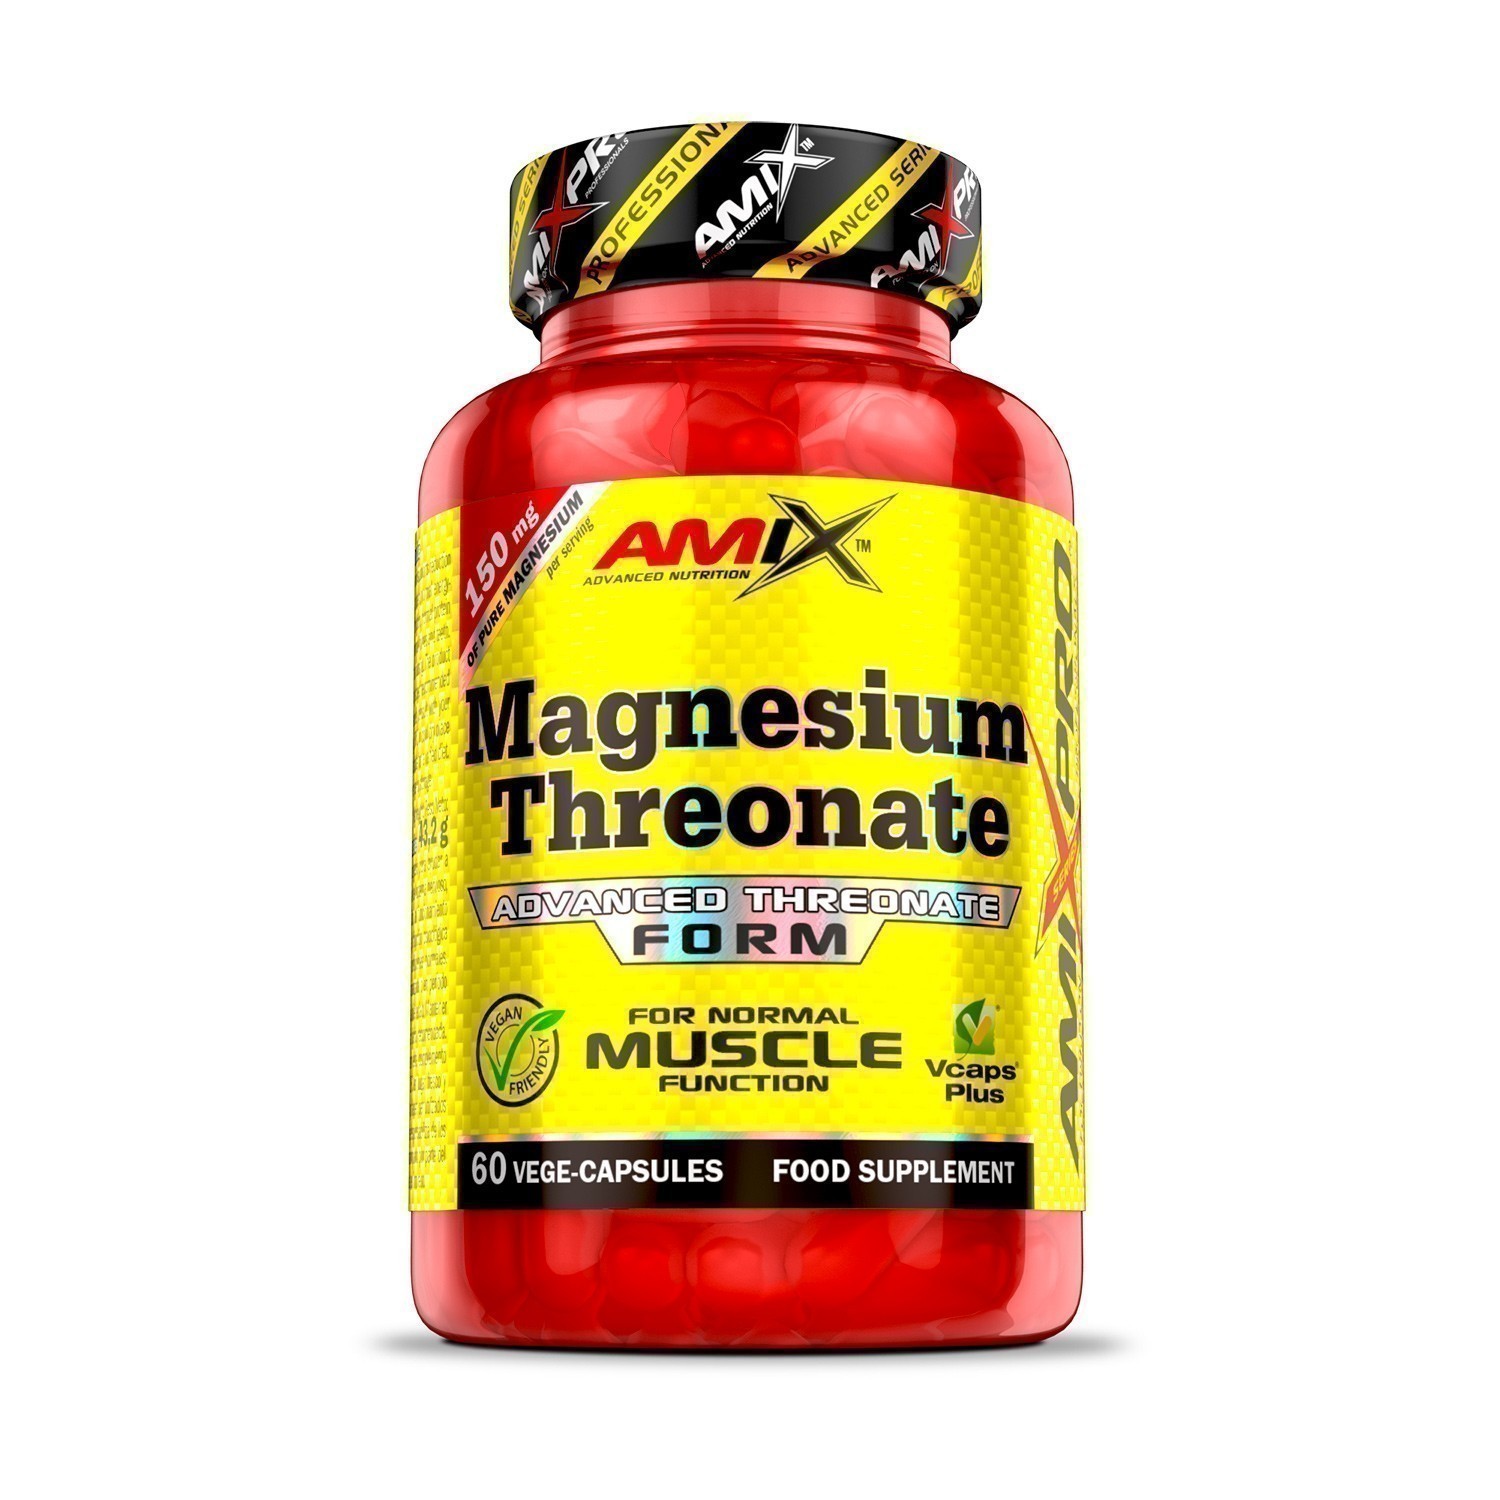 Amix Magnesium Threonate